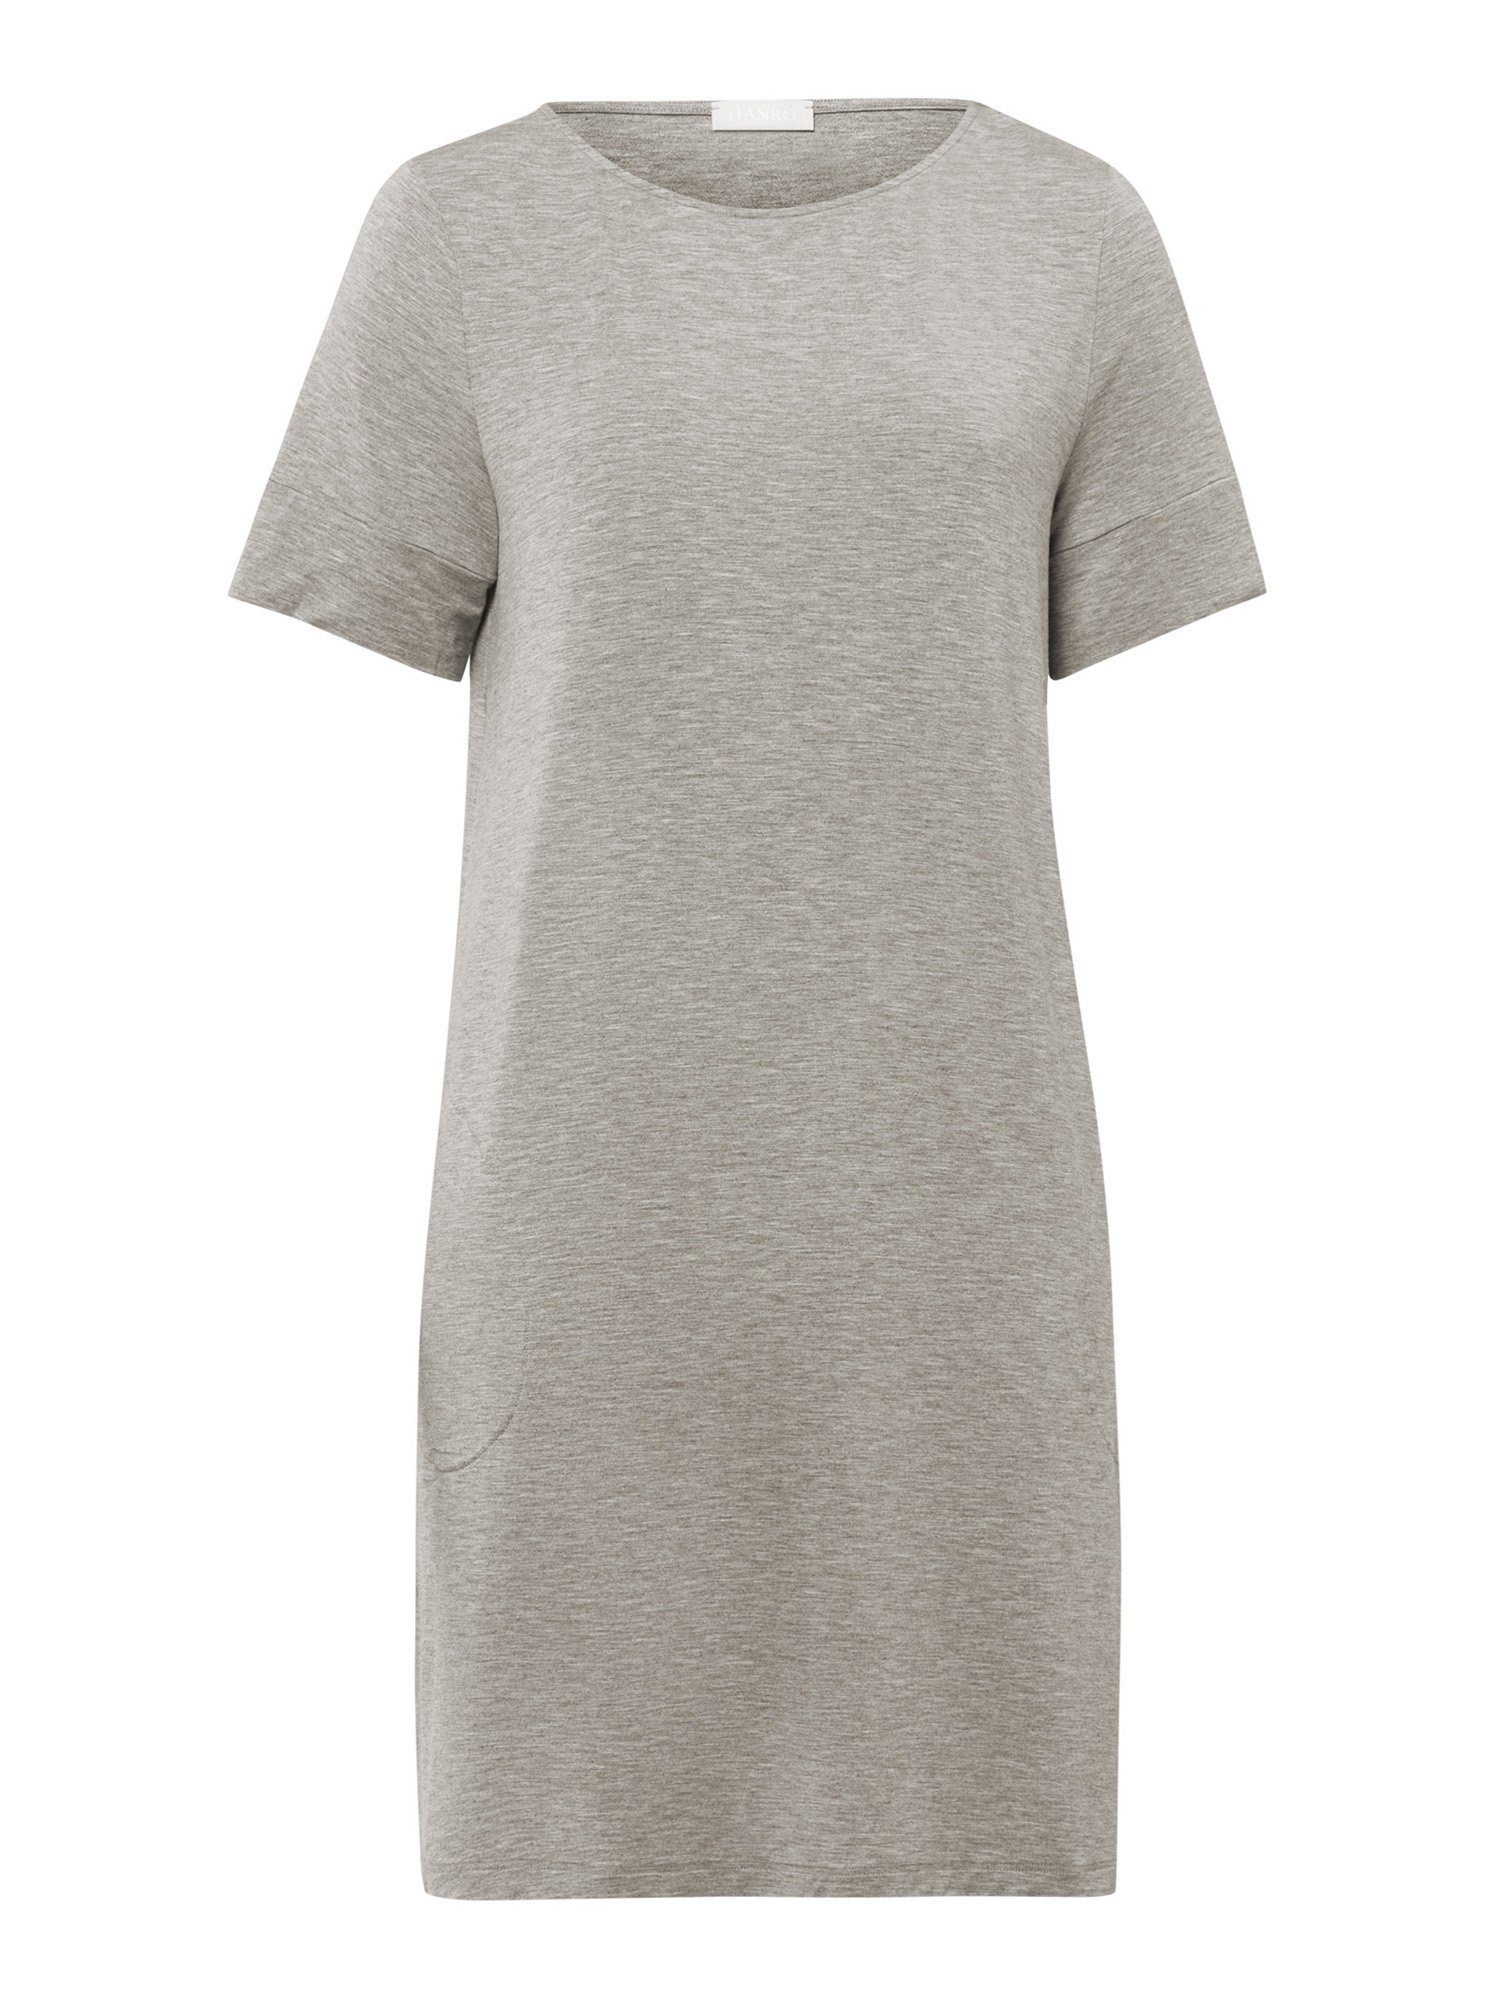 Hanro Nachthemd Natural Elegance Nacht-hemd sleepwear grey schlafmode melange